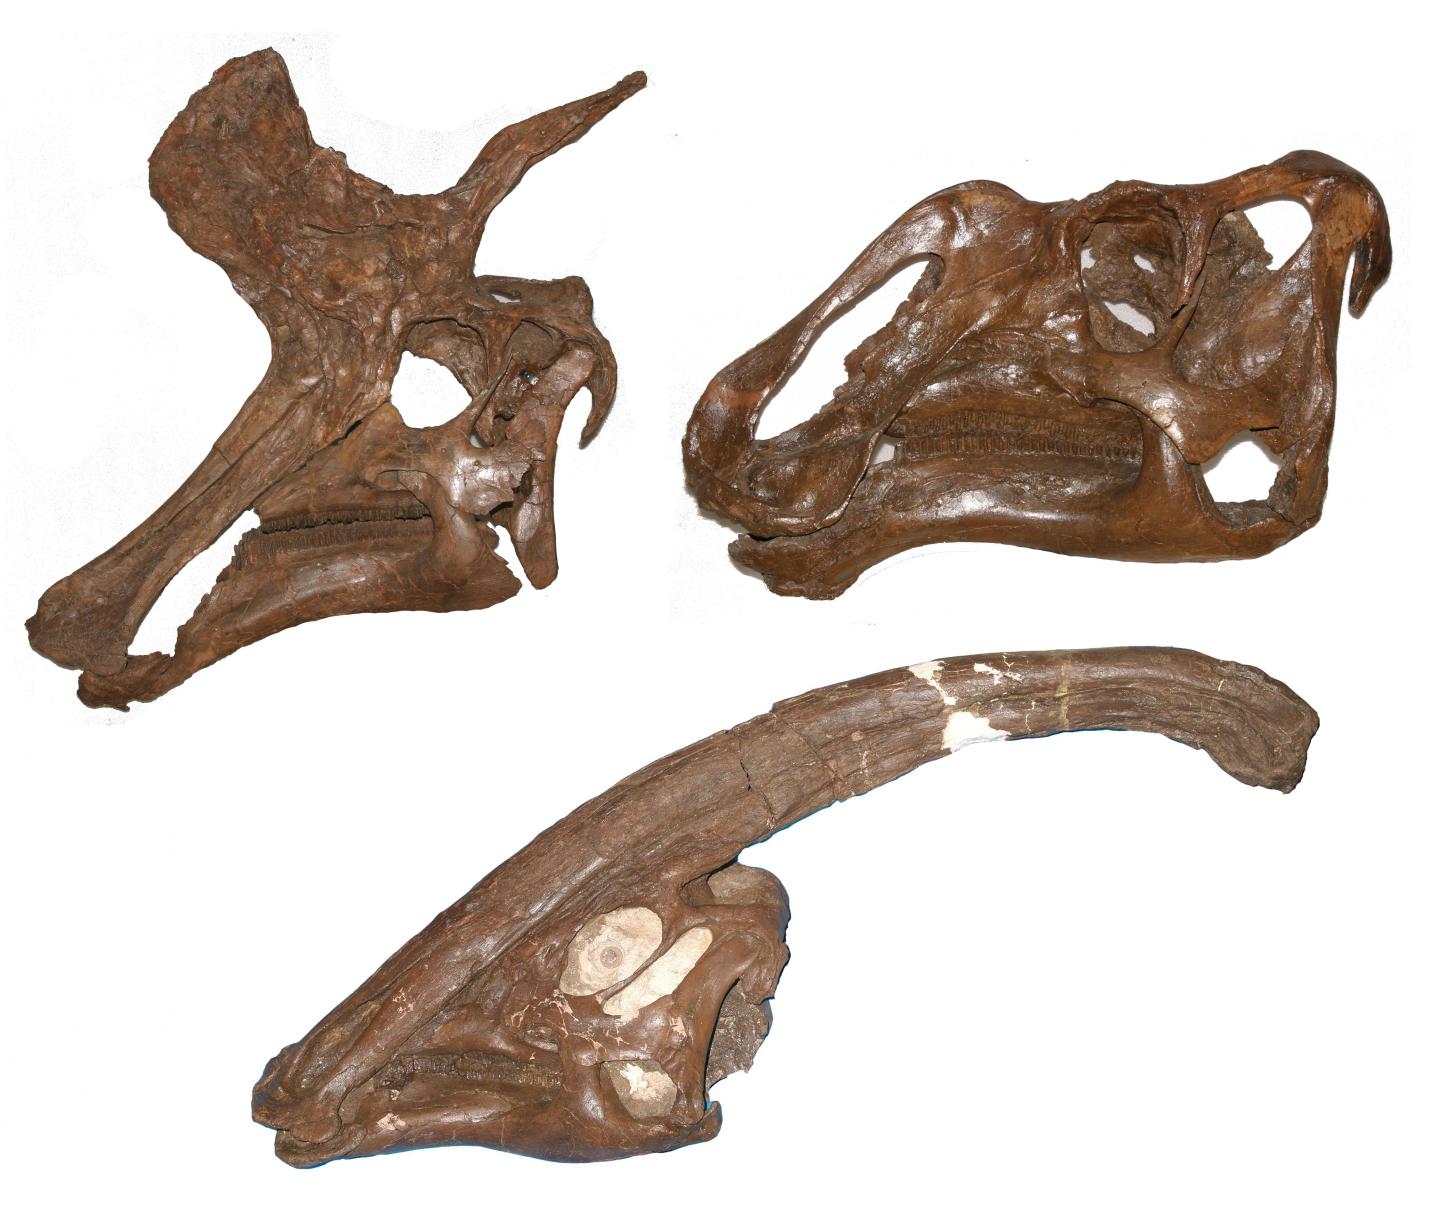 The Skulls Of Three Hadrosaur Dinosaurs